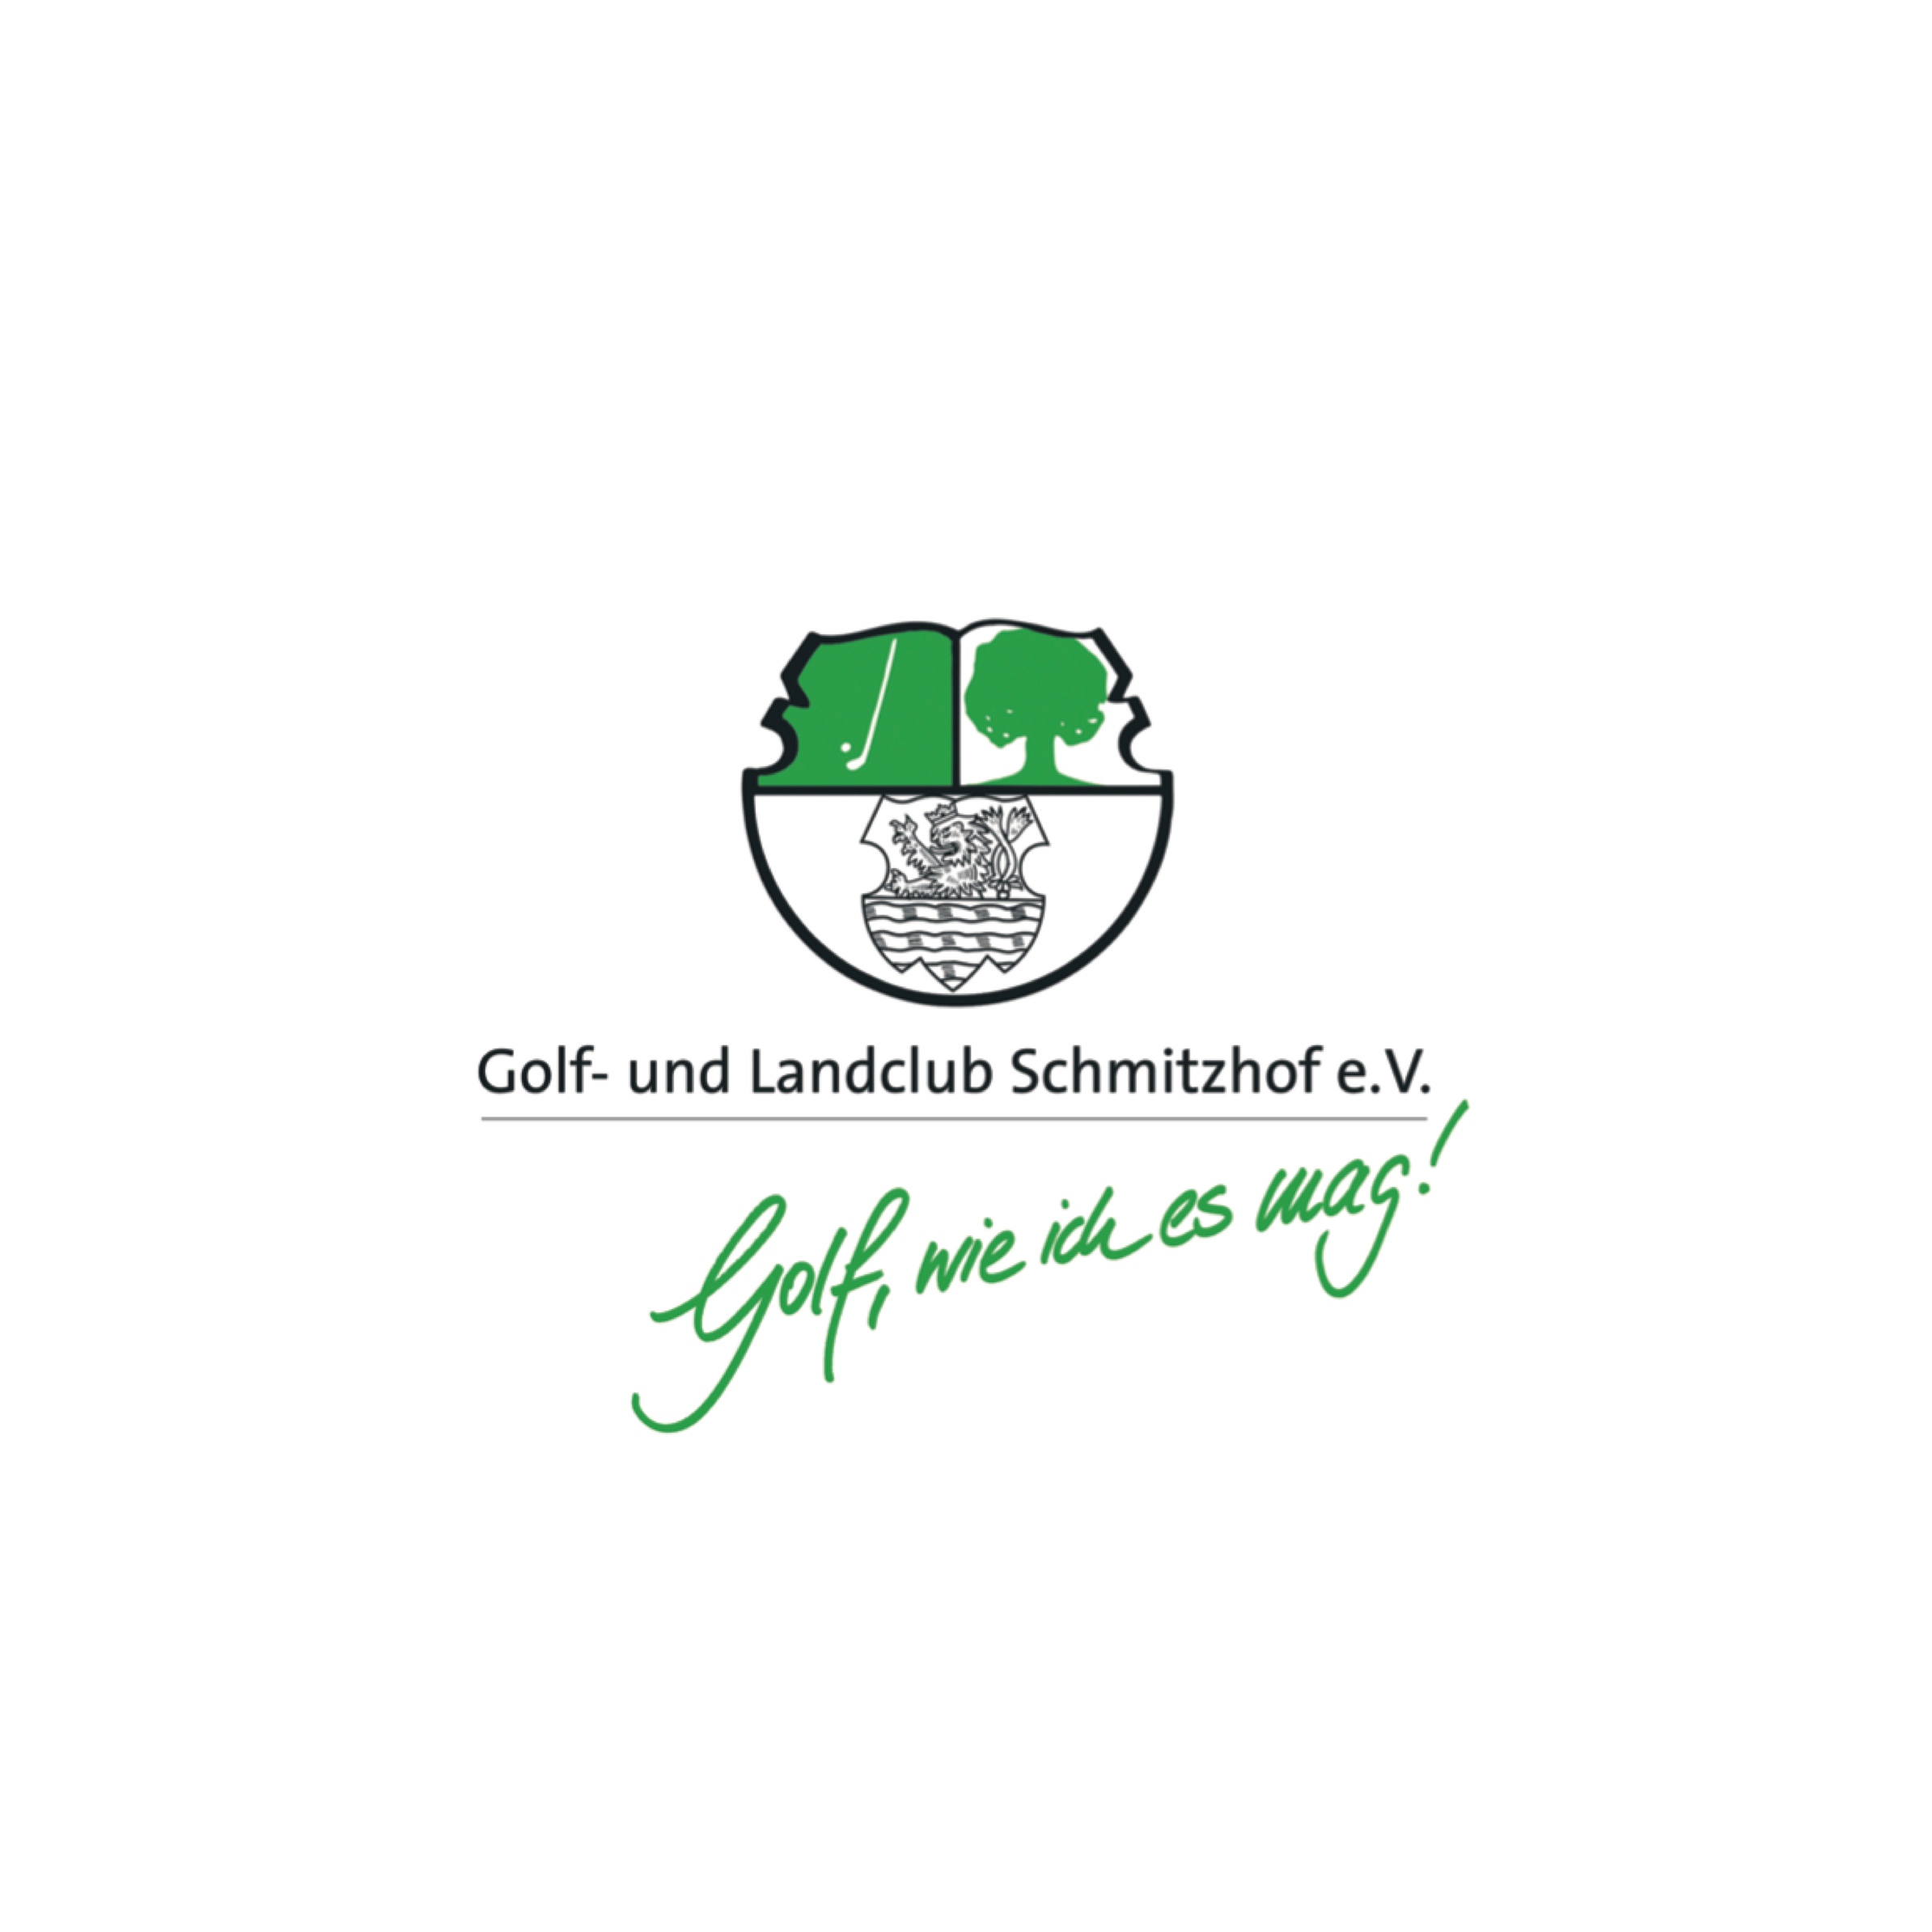 56. Schmitzhof (Golf- und Landclub Schmitzhof e.V.)